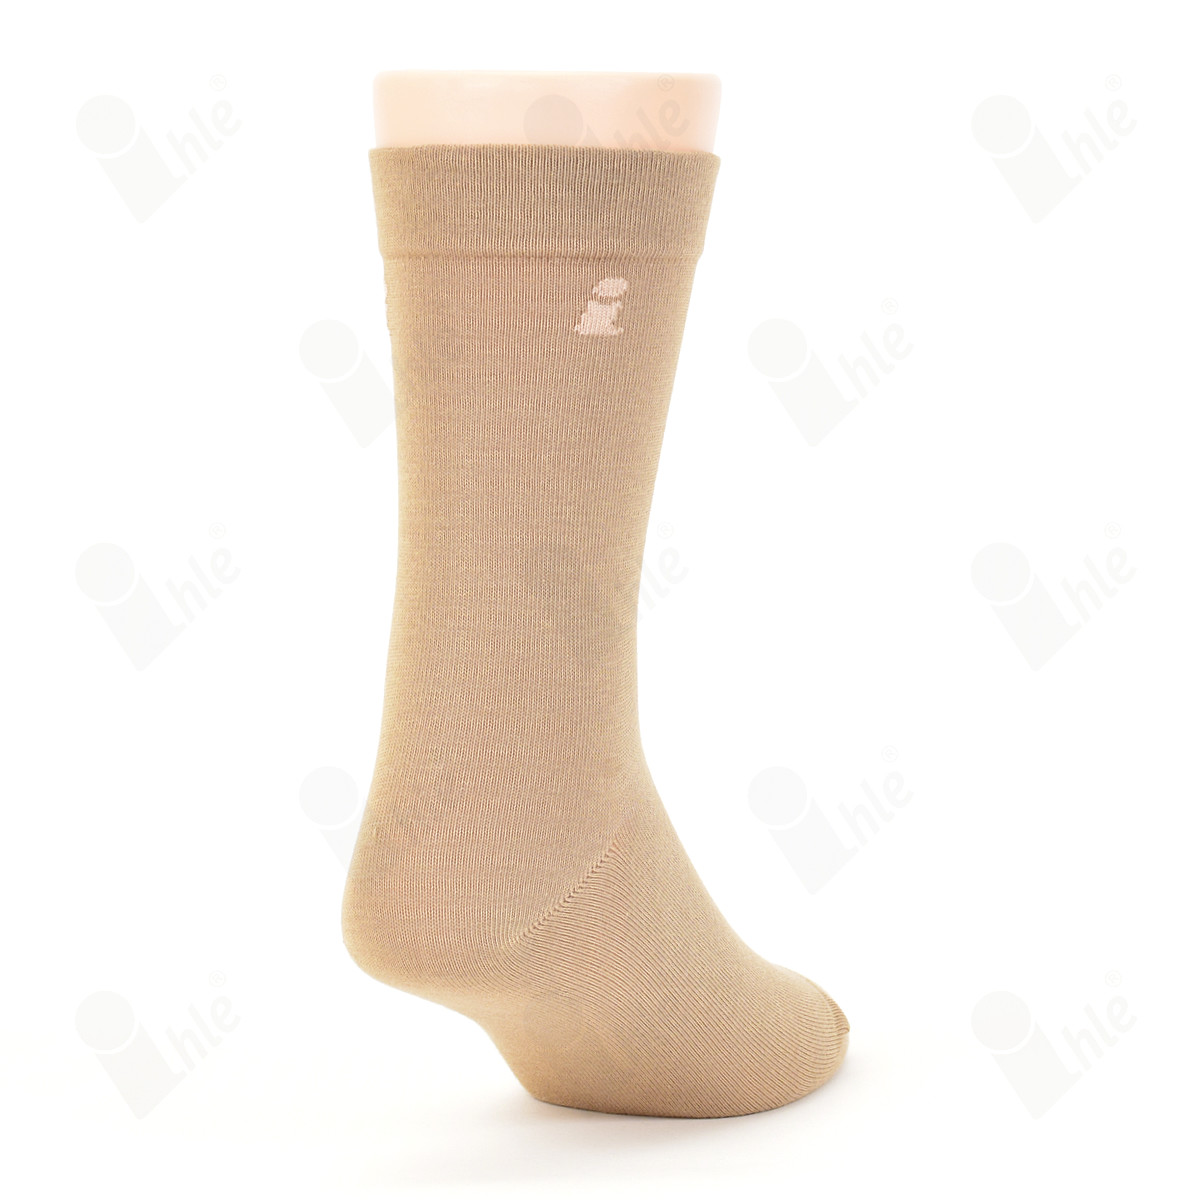 Ihle Socke klassisch beige Gr. 35-38